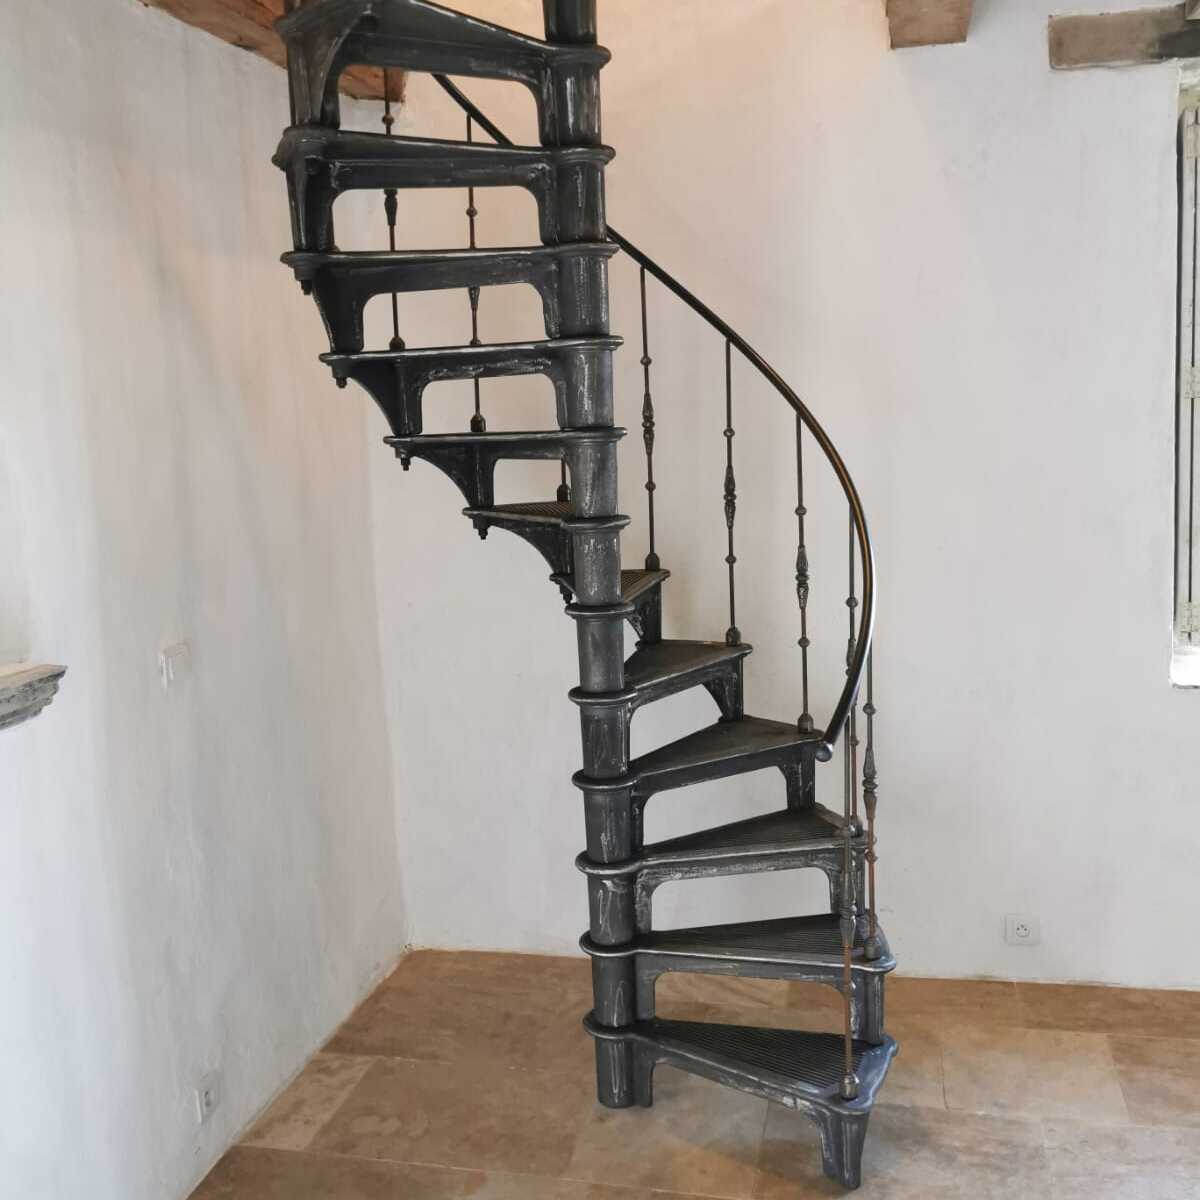 Cast iron spiral staircase model Paris turning anti-clockwise